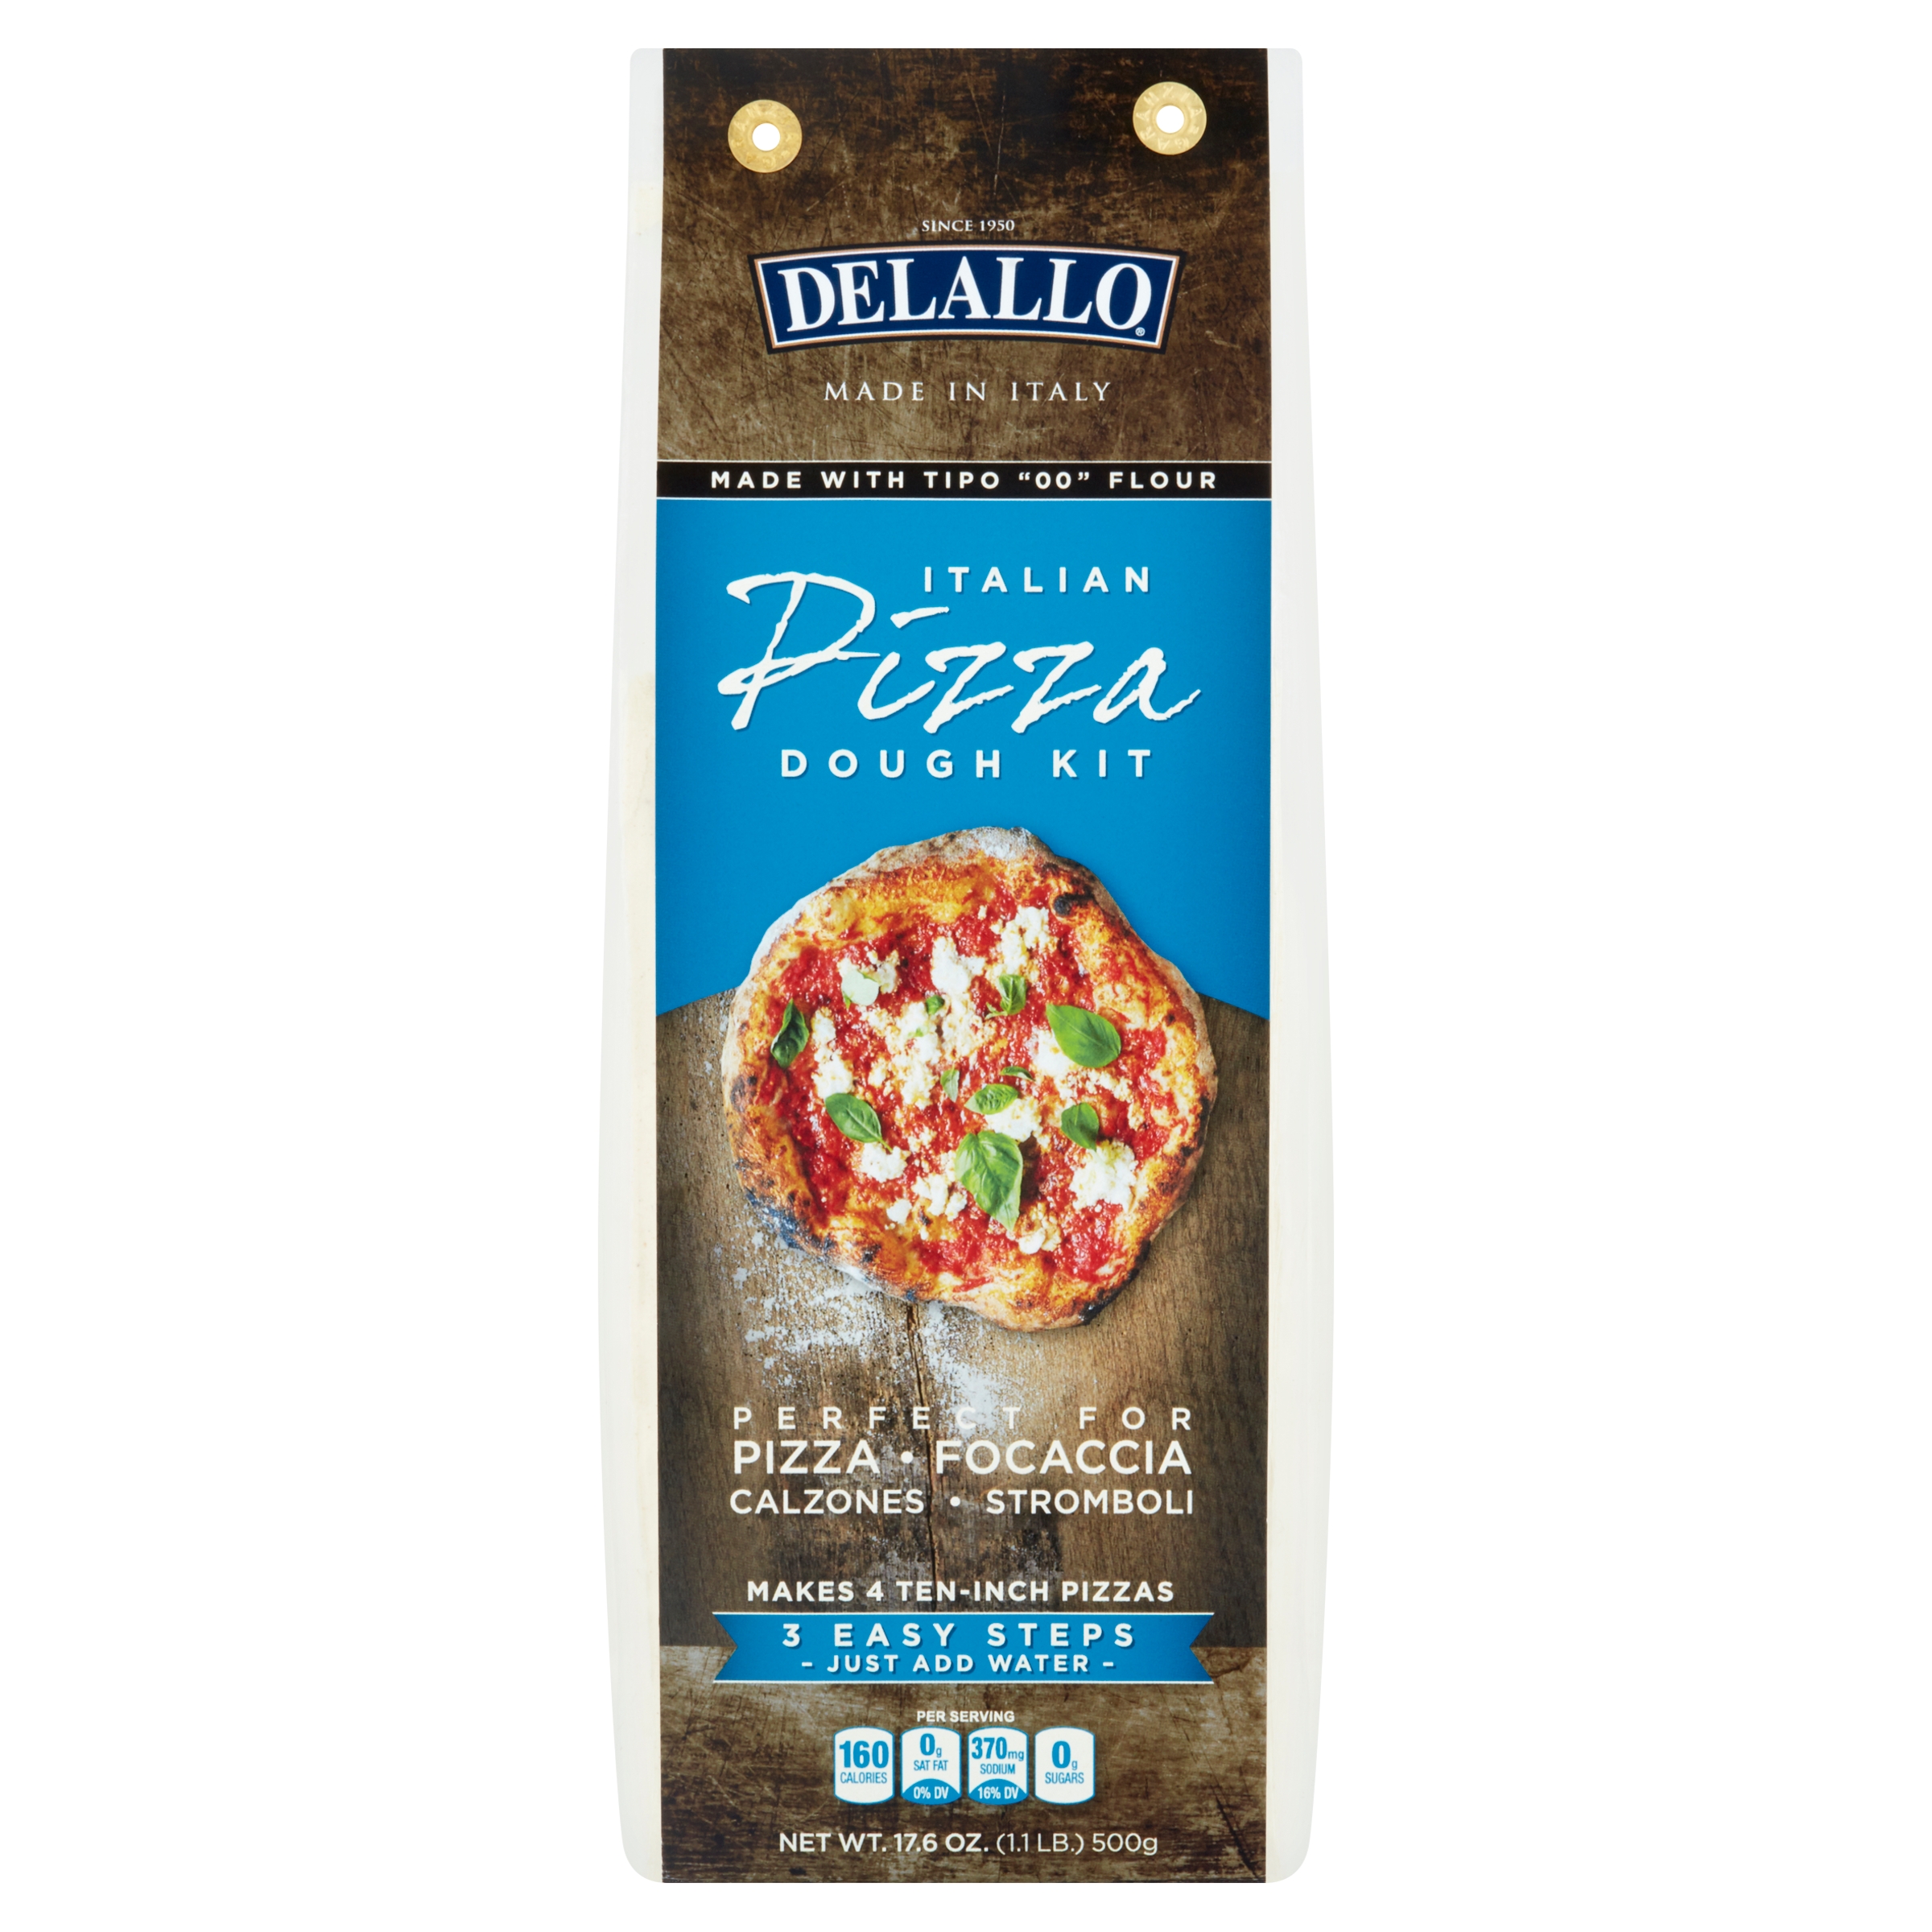 DeLallo Pizza Dough Kit, Italian Pizzeria-Style Crust Mix, Shelf Stable, 17.6 oz Bag - image 1 of 9